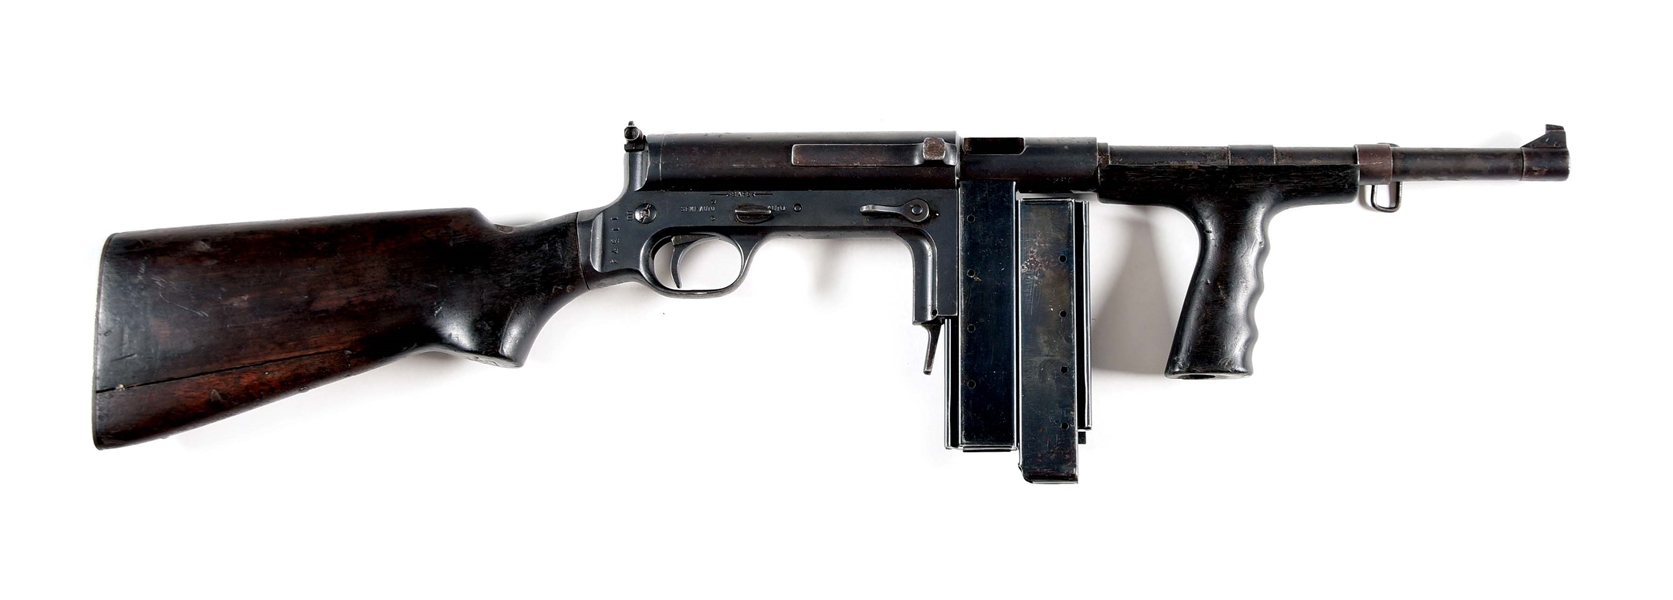 (N) DESIRABLE ORIGINAL MARLIN MANUFACTURED UNITED DEFENSE UD-42 MACHINE GUN (PRE-86 DEALER SAMPLE).